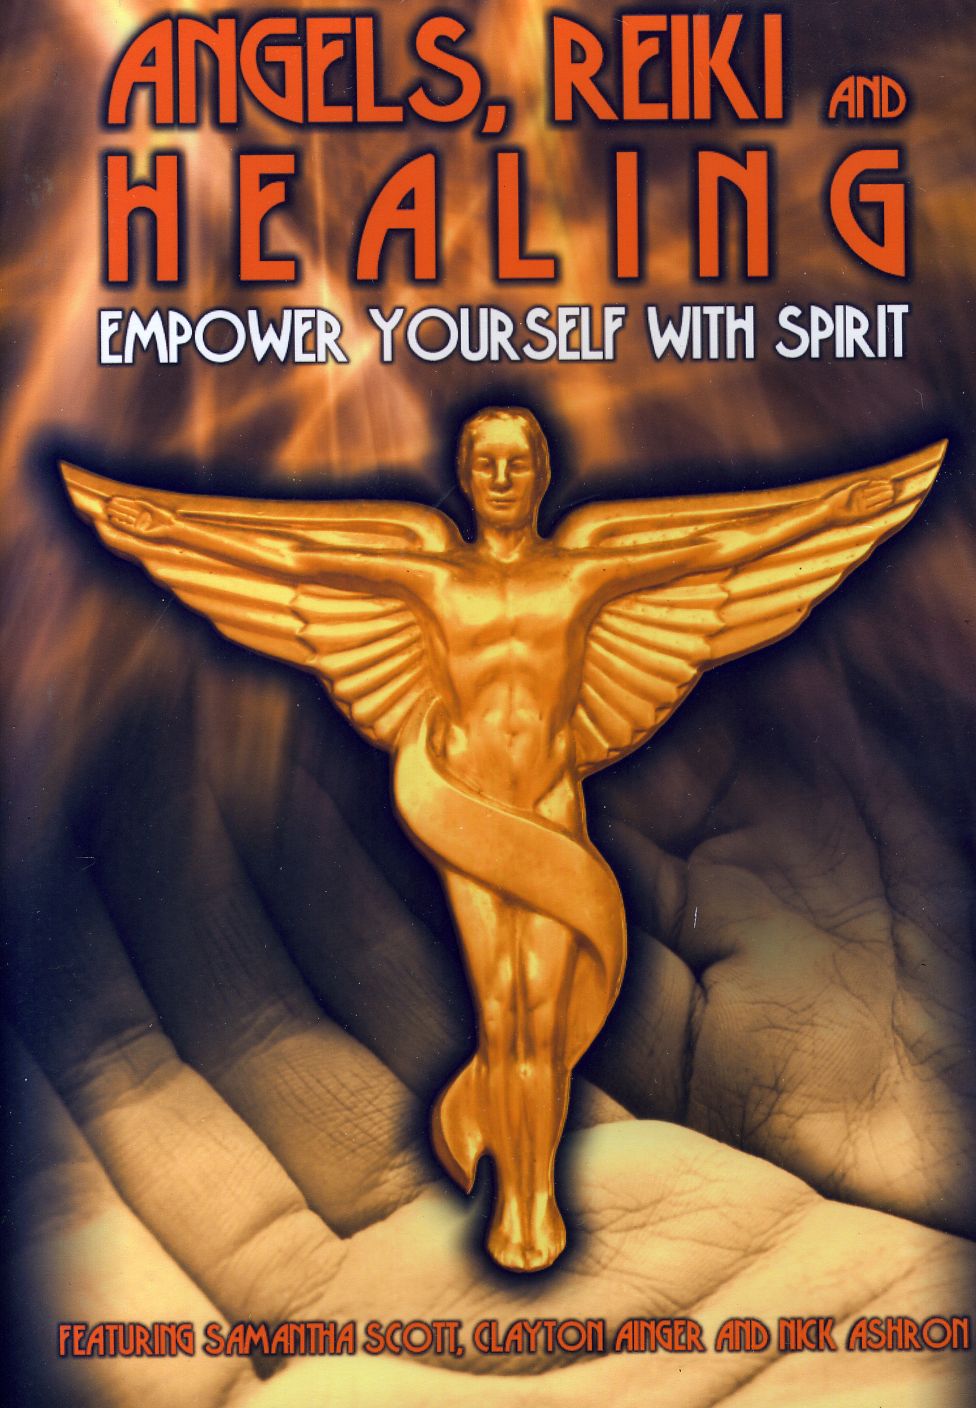 ANGELS REIKI & HEALING: EMPOWER YOURSELF WITH SPIR